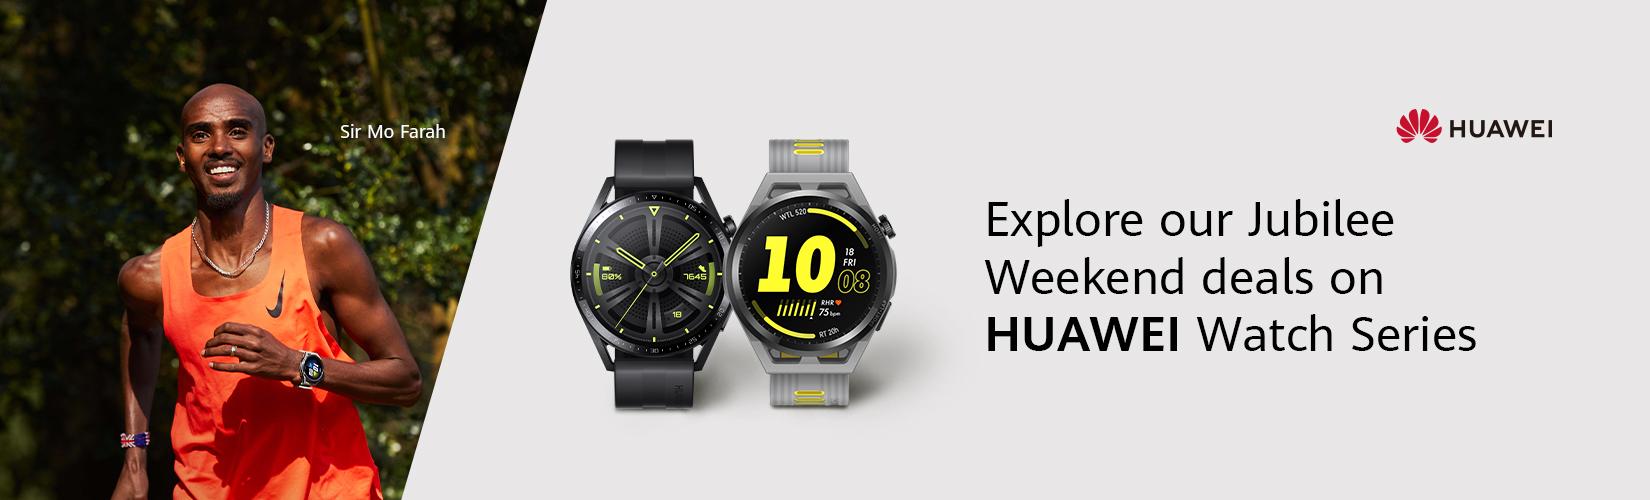 Explore our Jubilee weekend deals on Huawei watch series.